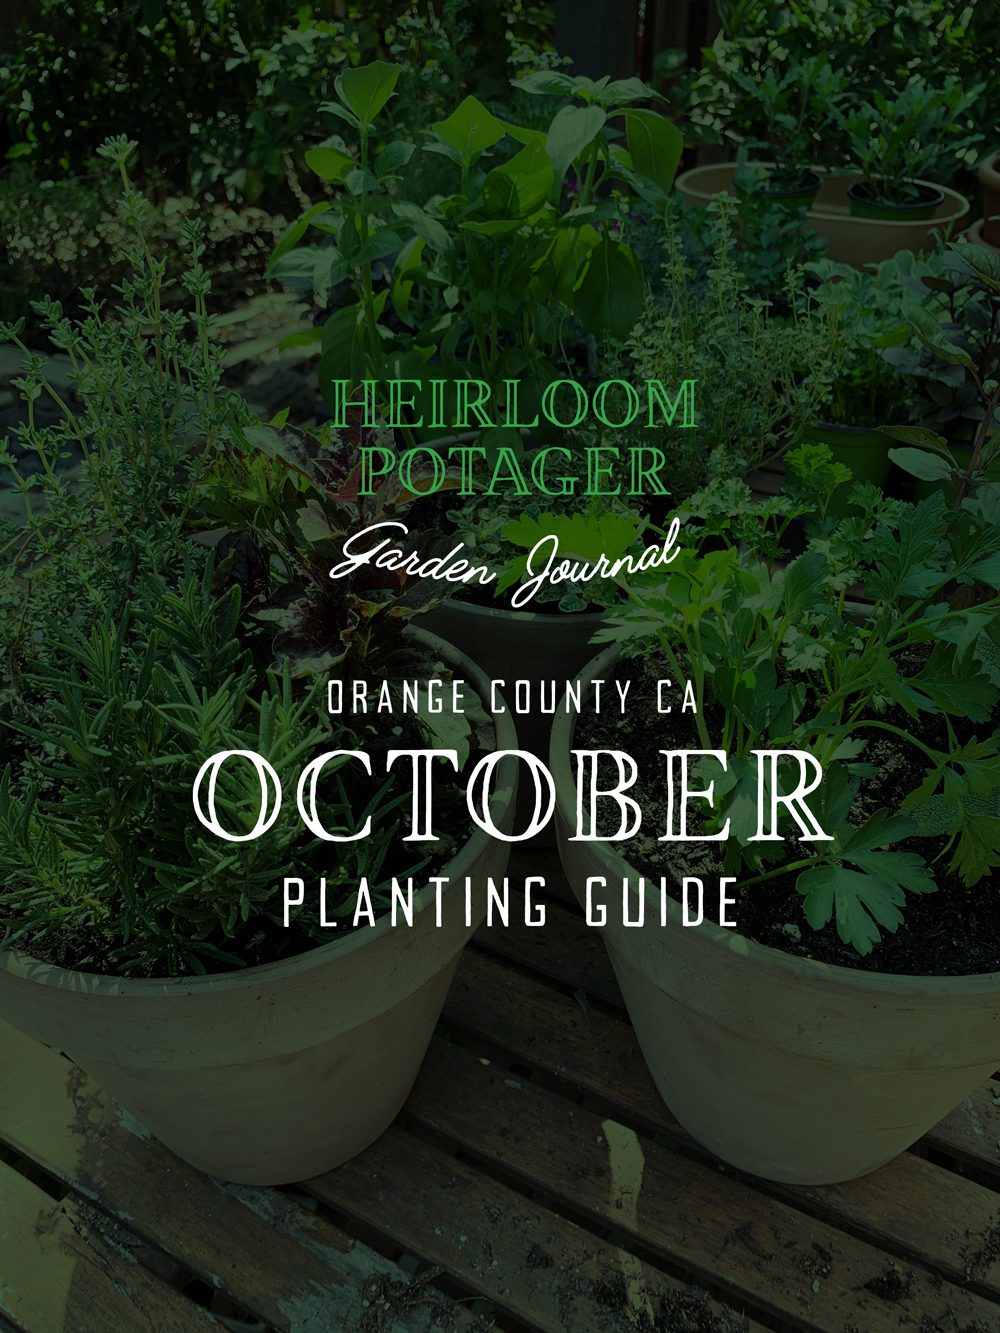 Heirloom Potager Garden Journal | Orange County, CA October Planting Guide